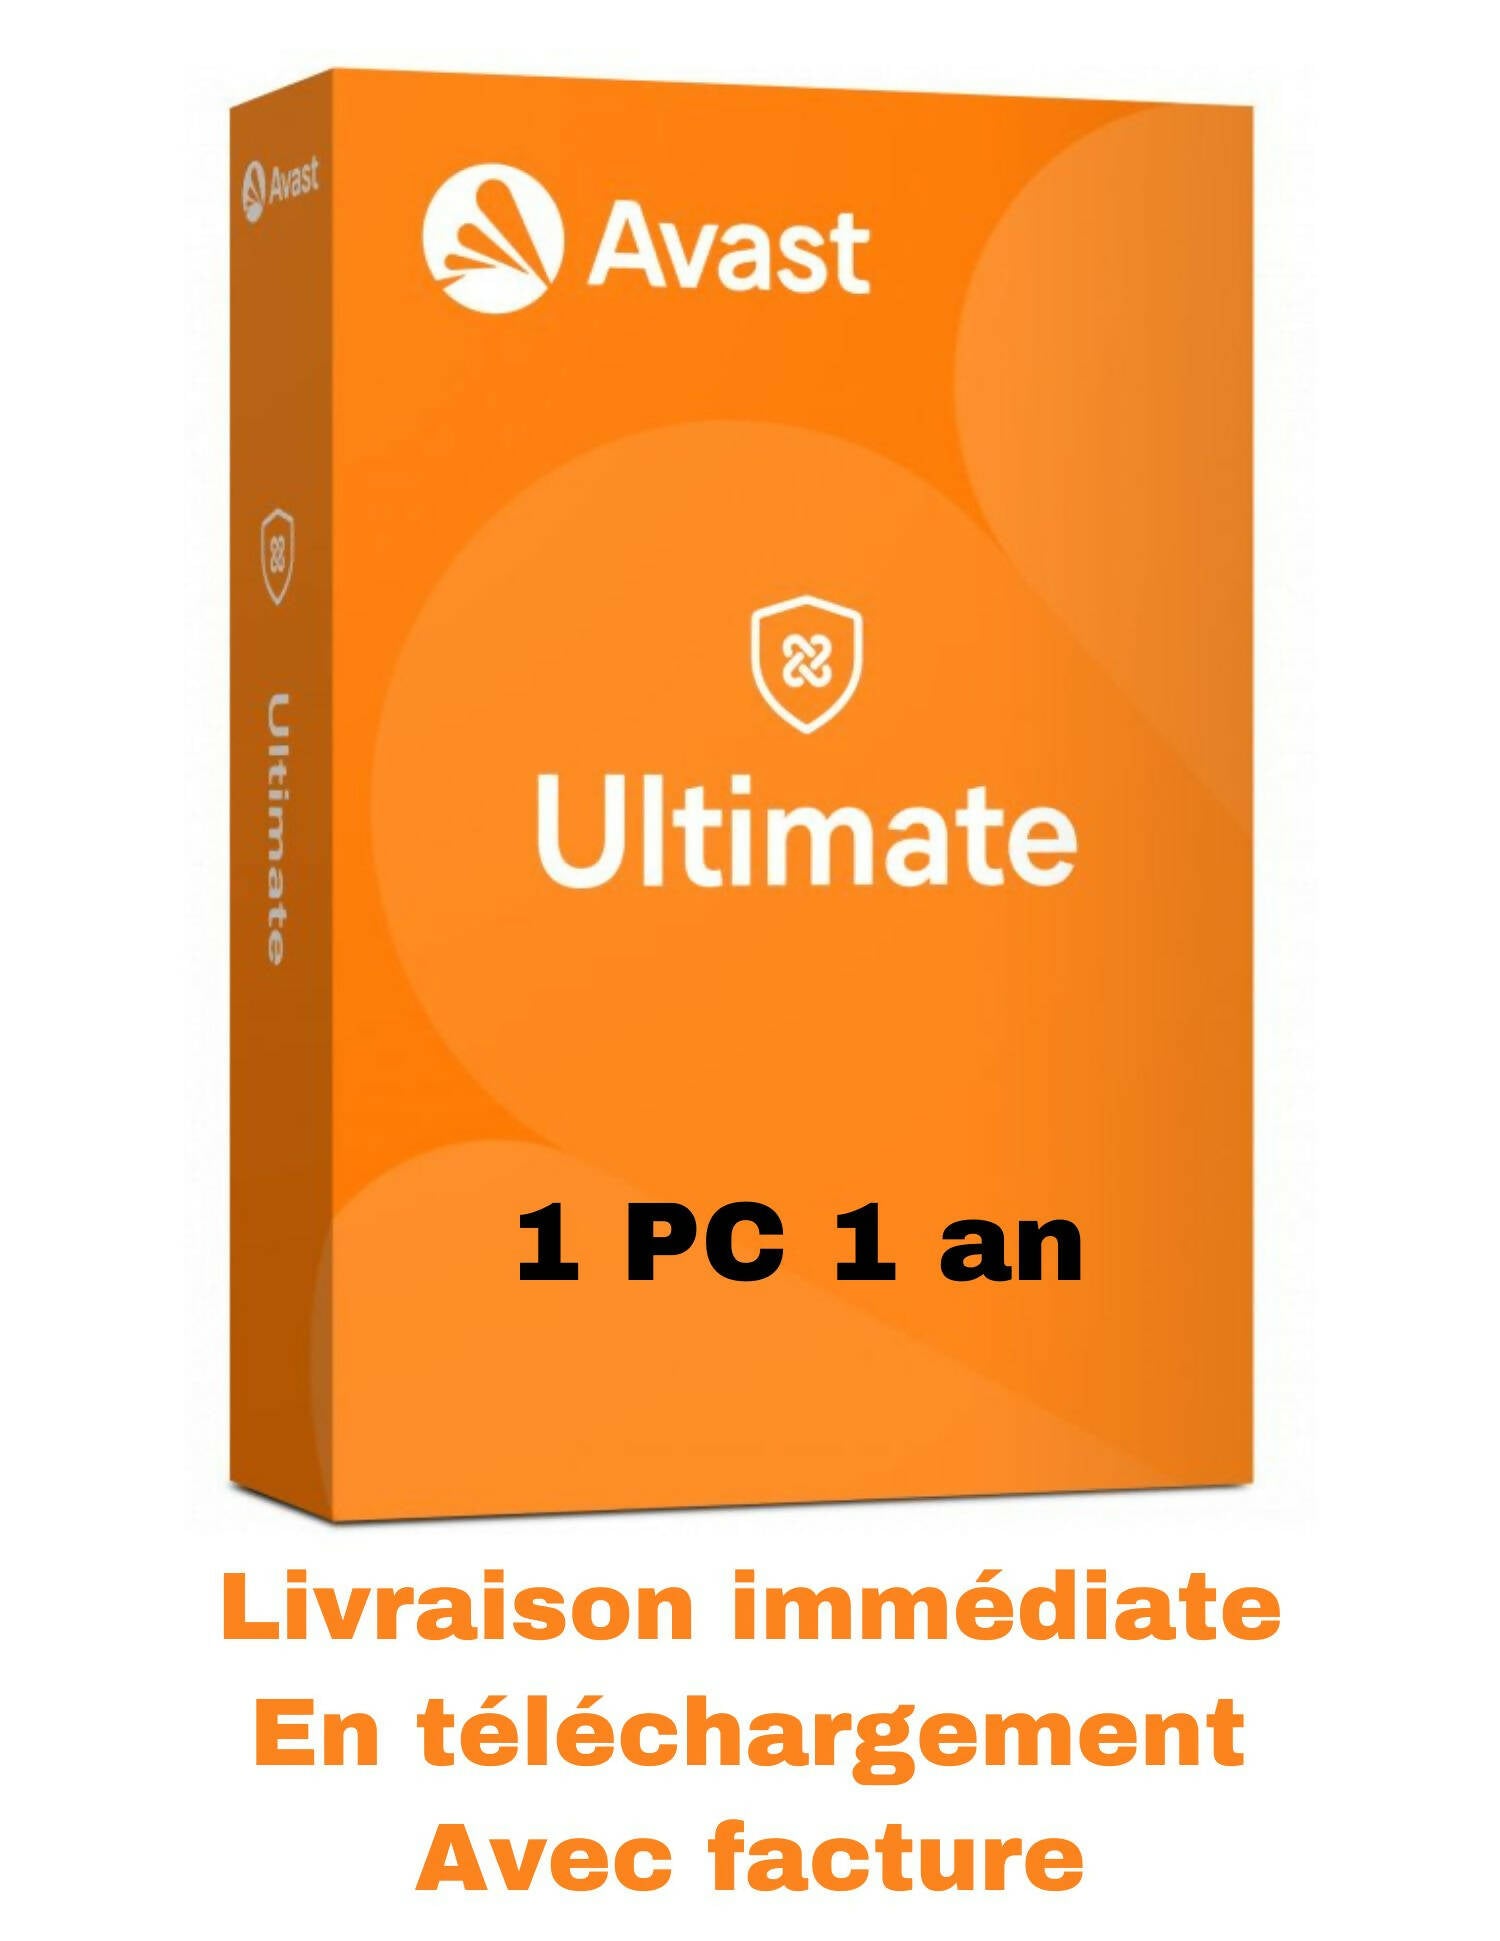 Avast Ultimate 1 PC 1 an clicktofournisseur.com